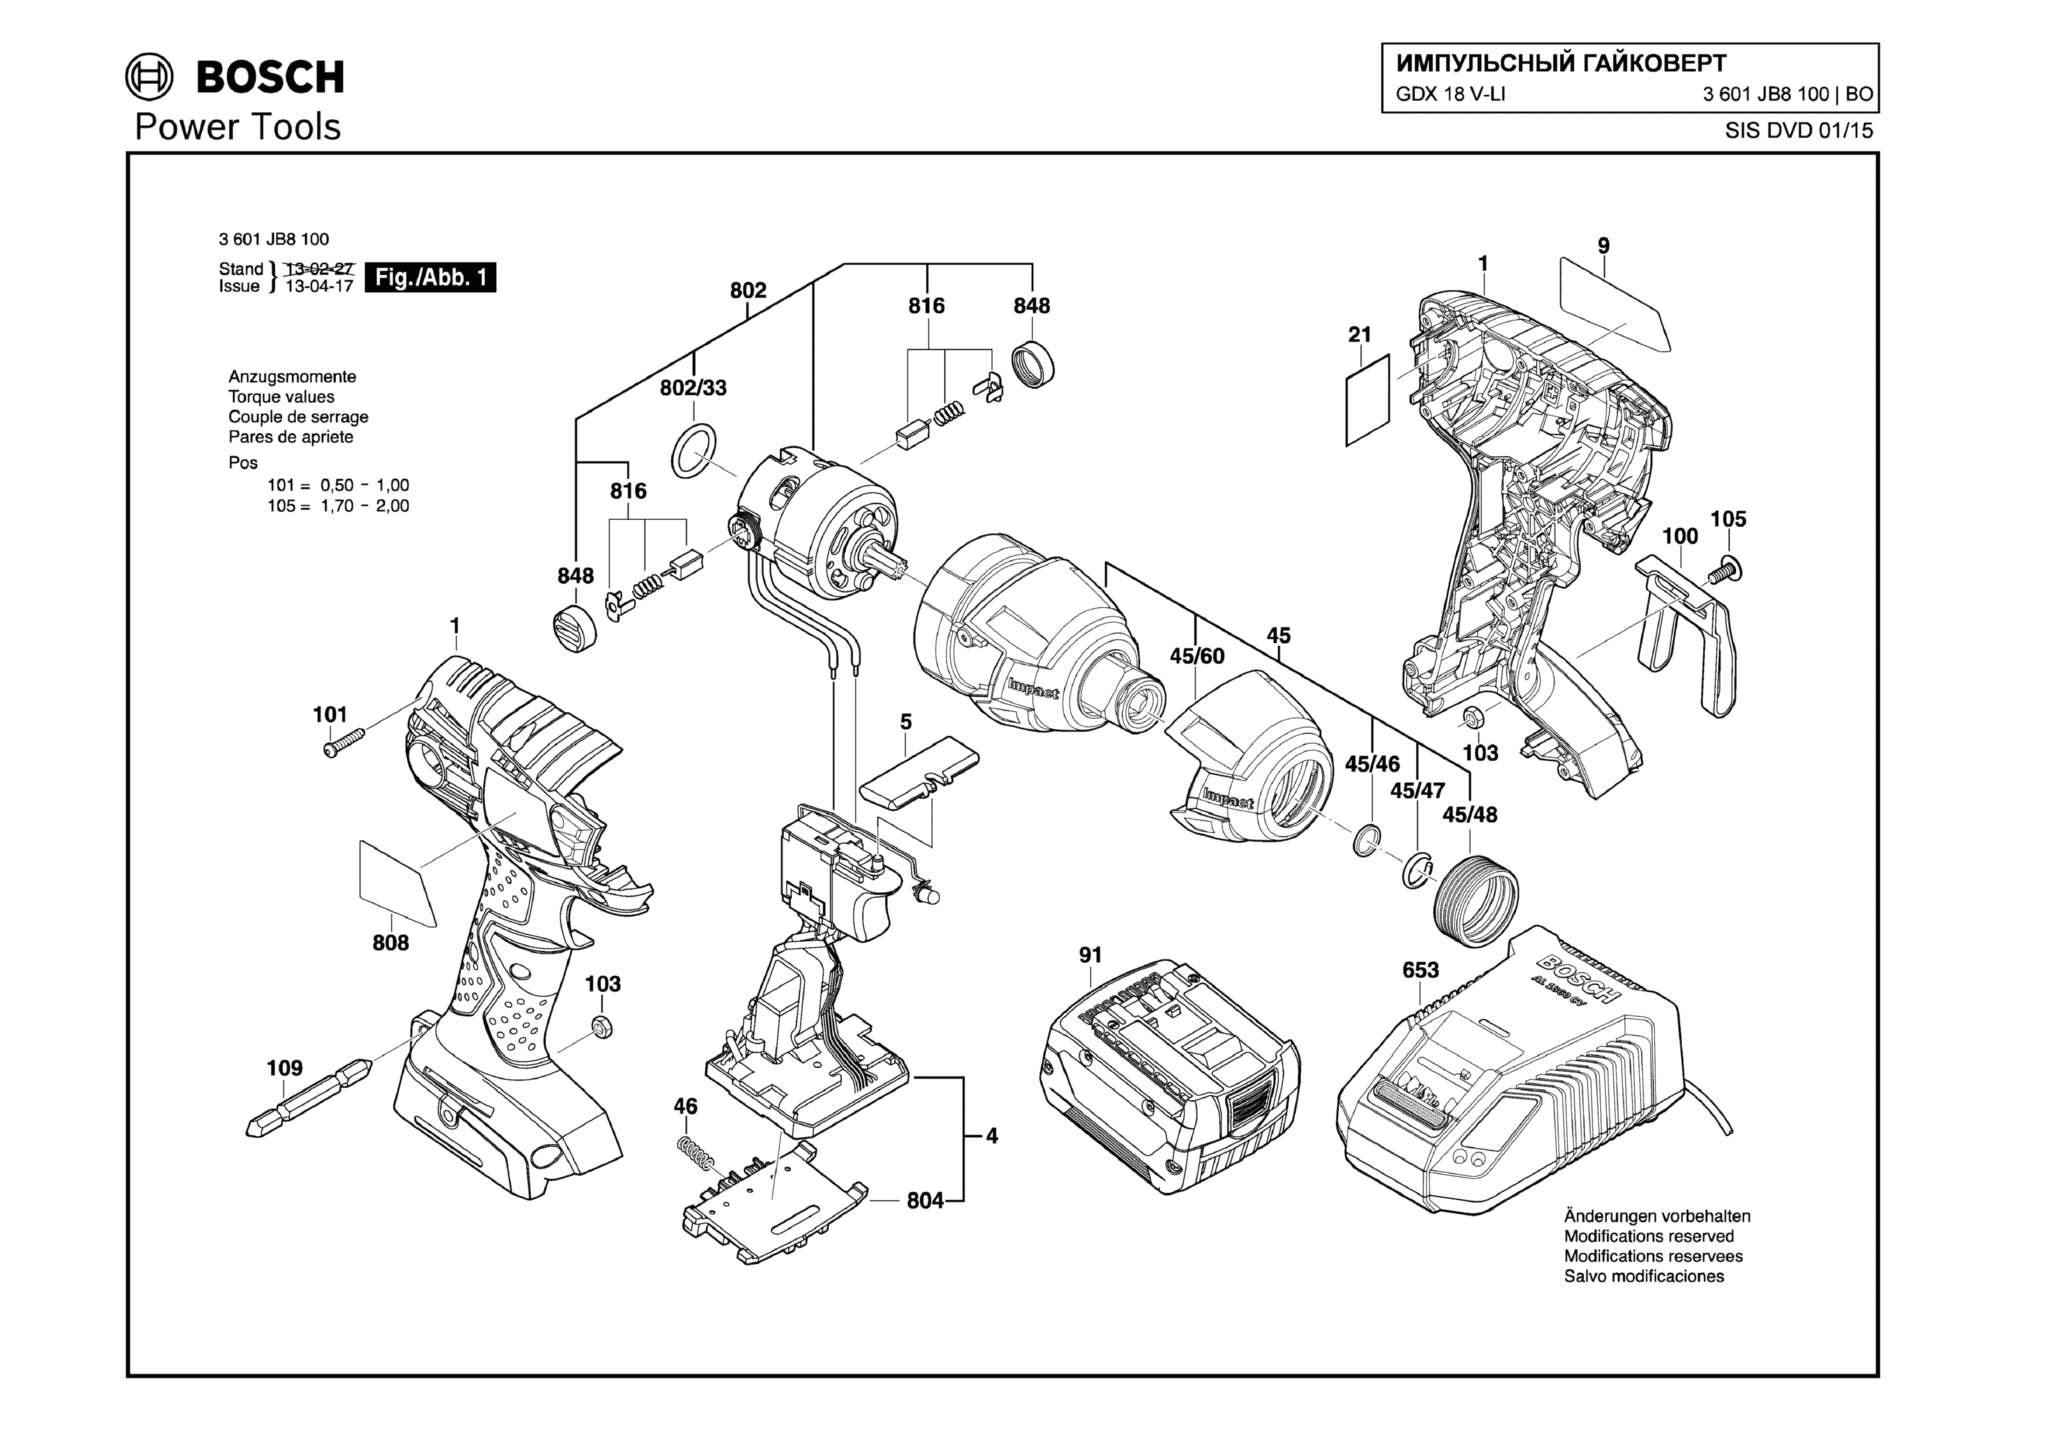 Запчасти, схема и деталировка Bosch GDX 18 V-LI (ТИП 3601JB8100)